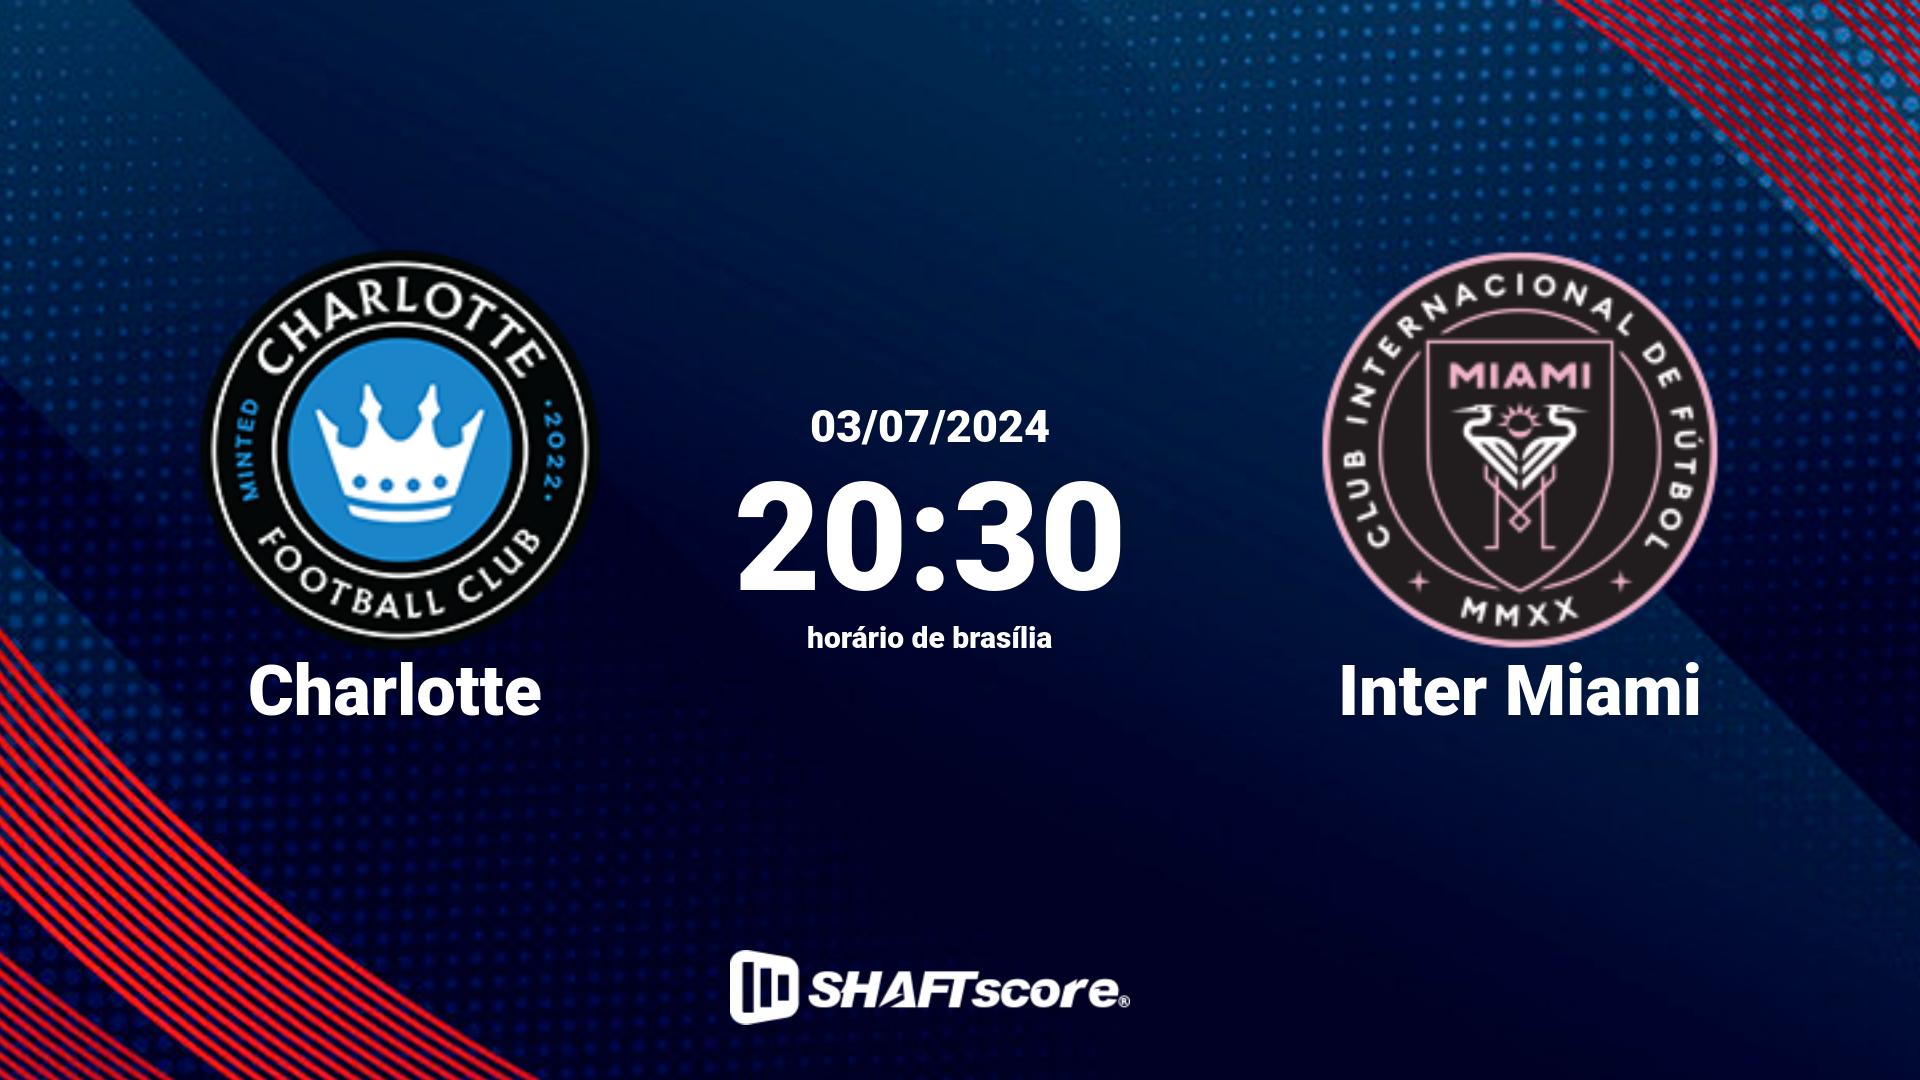 Estatísticas do jogo Charlotte vs Inter Miami 03.07 20:30